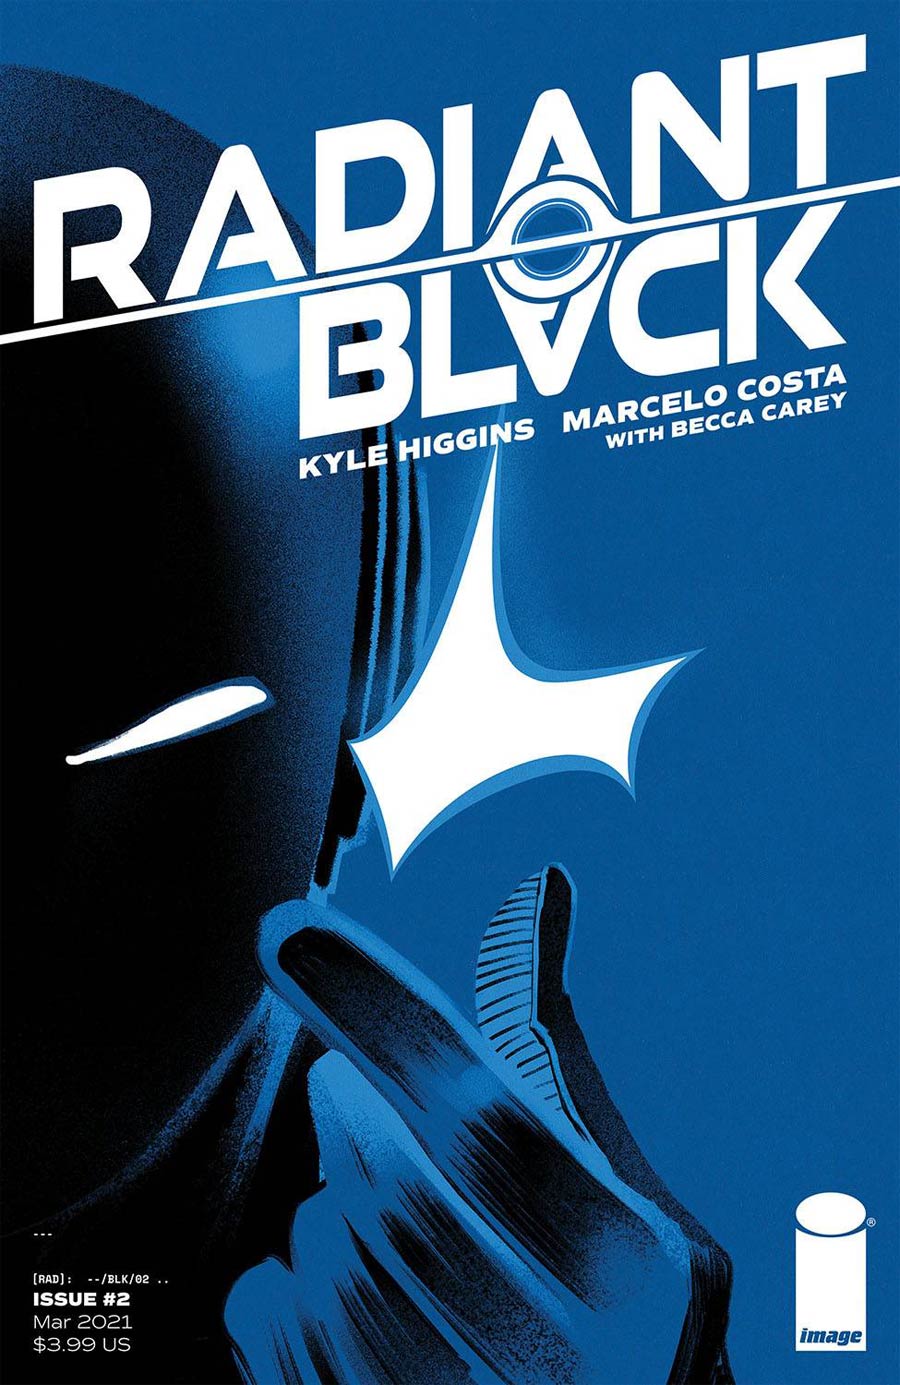 Radiant Black #2 Cover A Regular Marcelo Costa Cover (Limit 1 Per Customer)